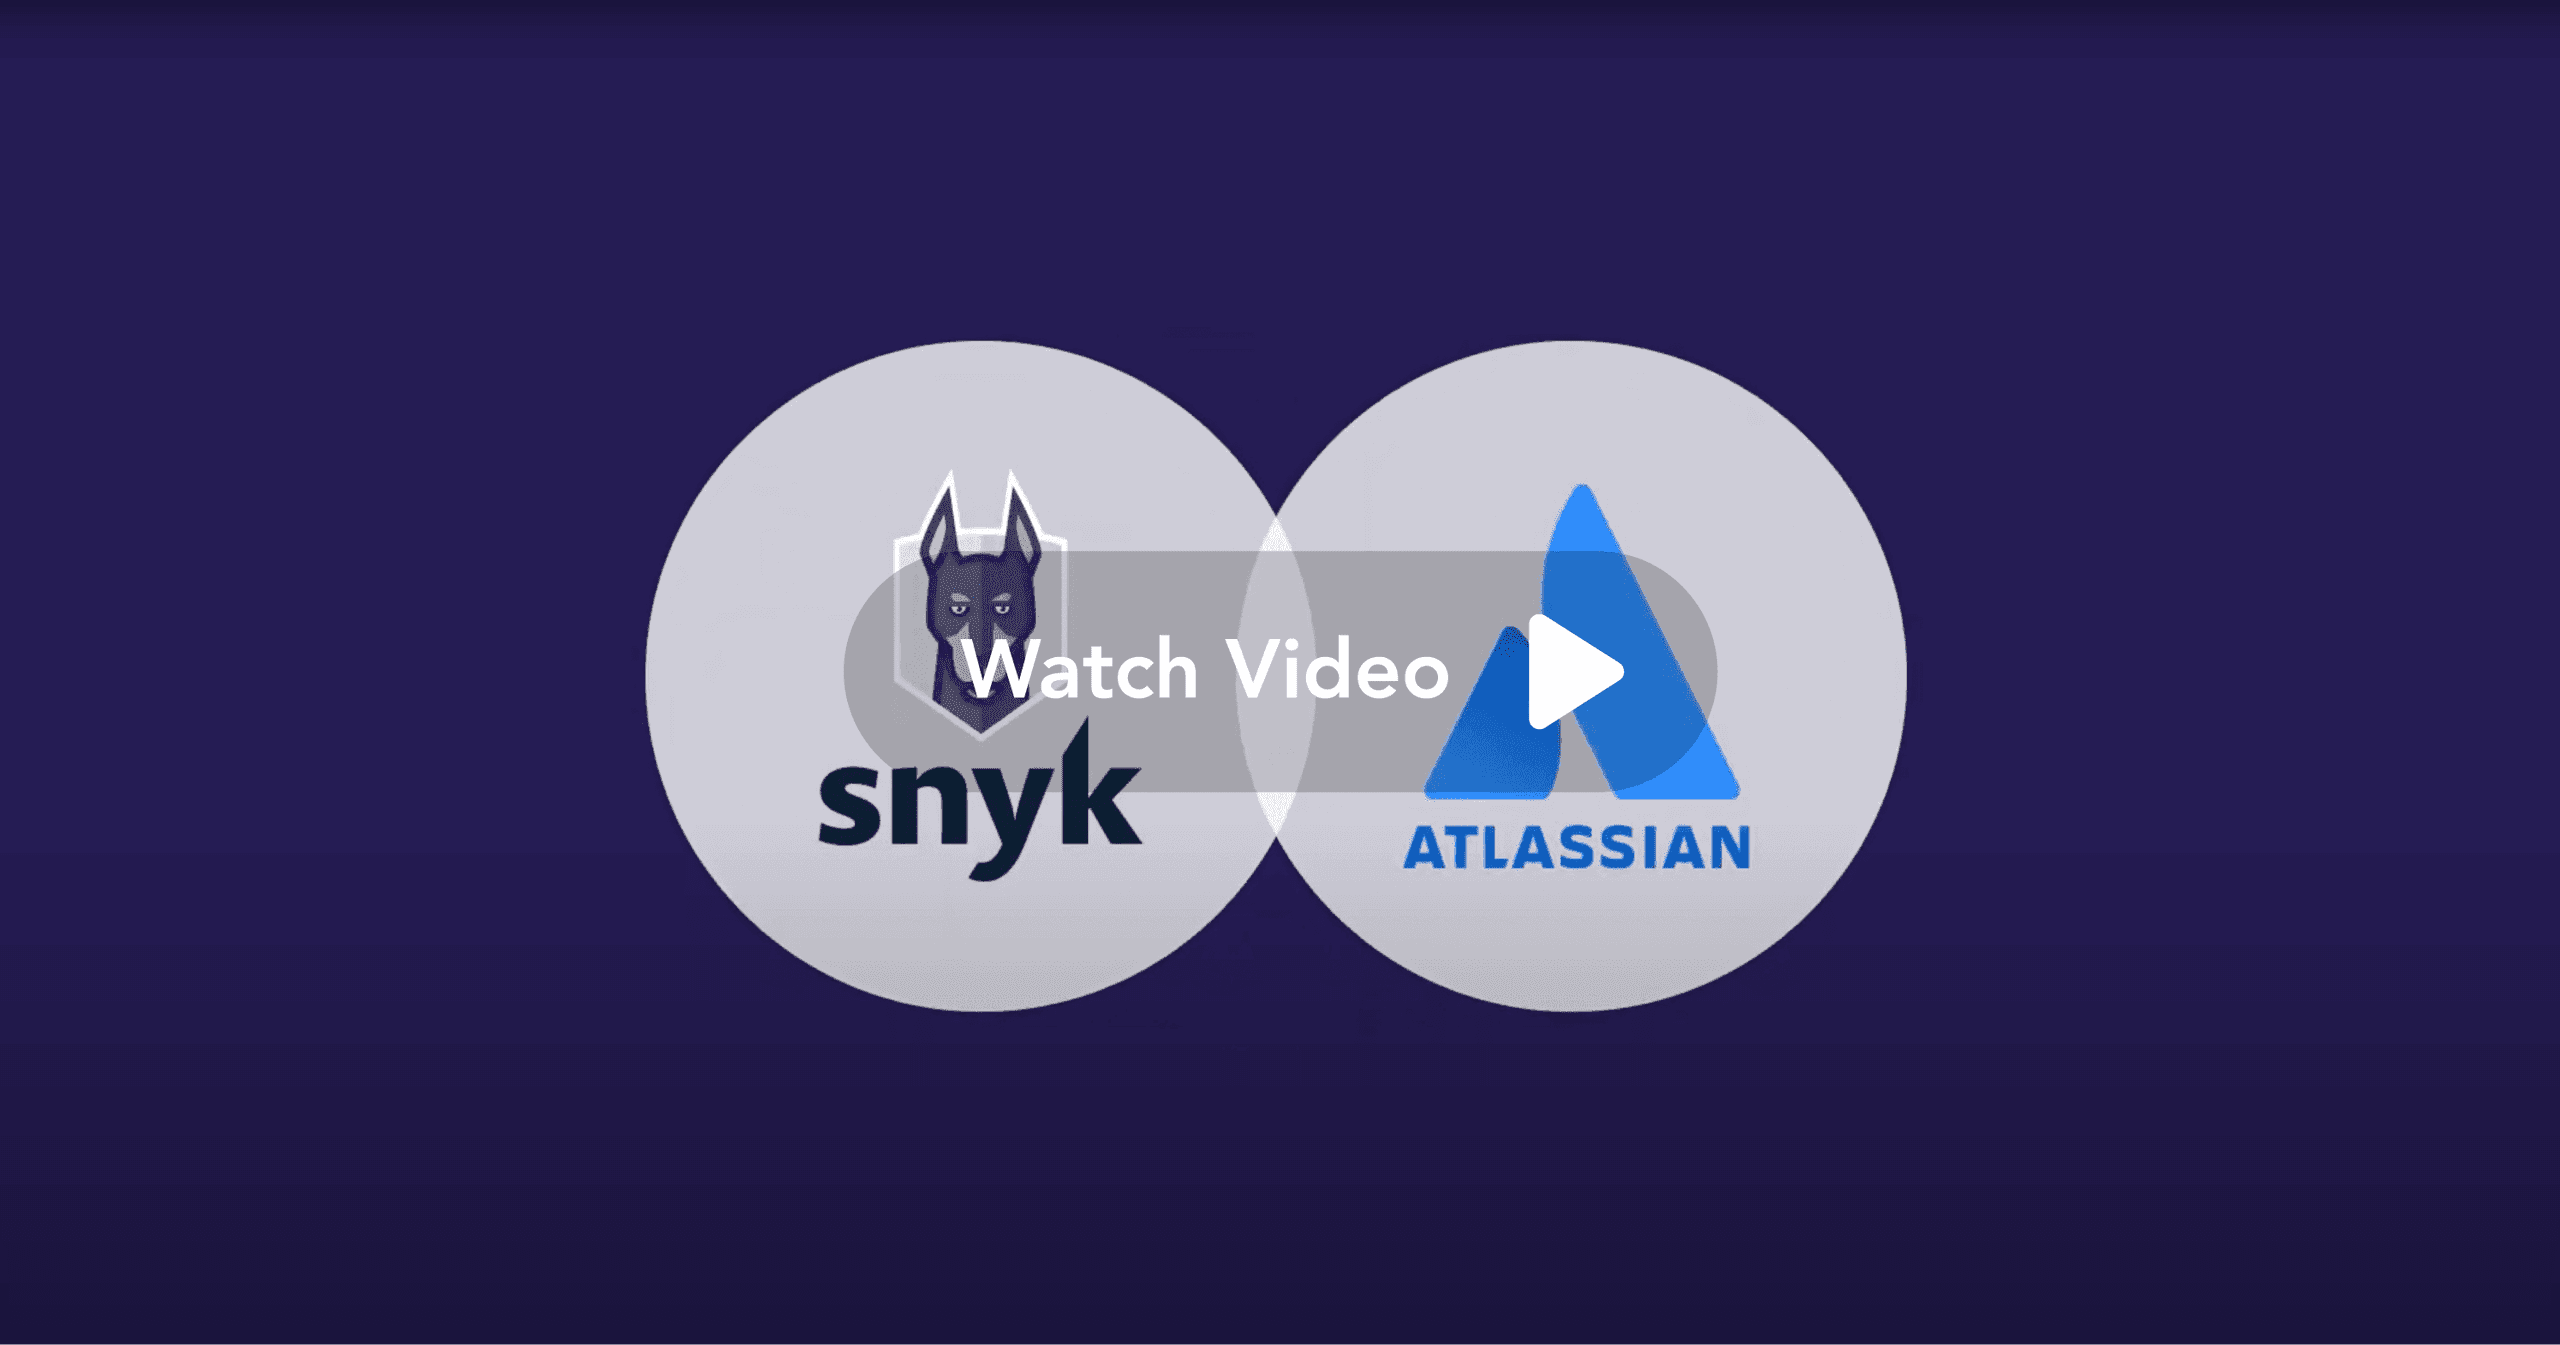 wordpress-sync/Snyk-and-Atlassian